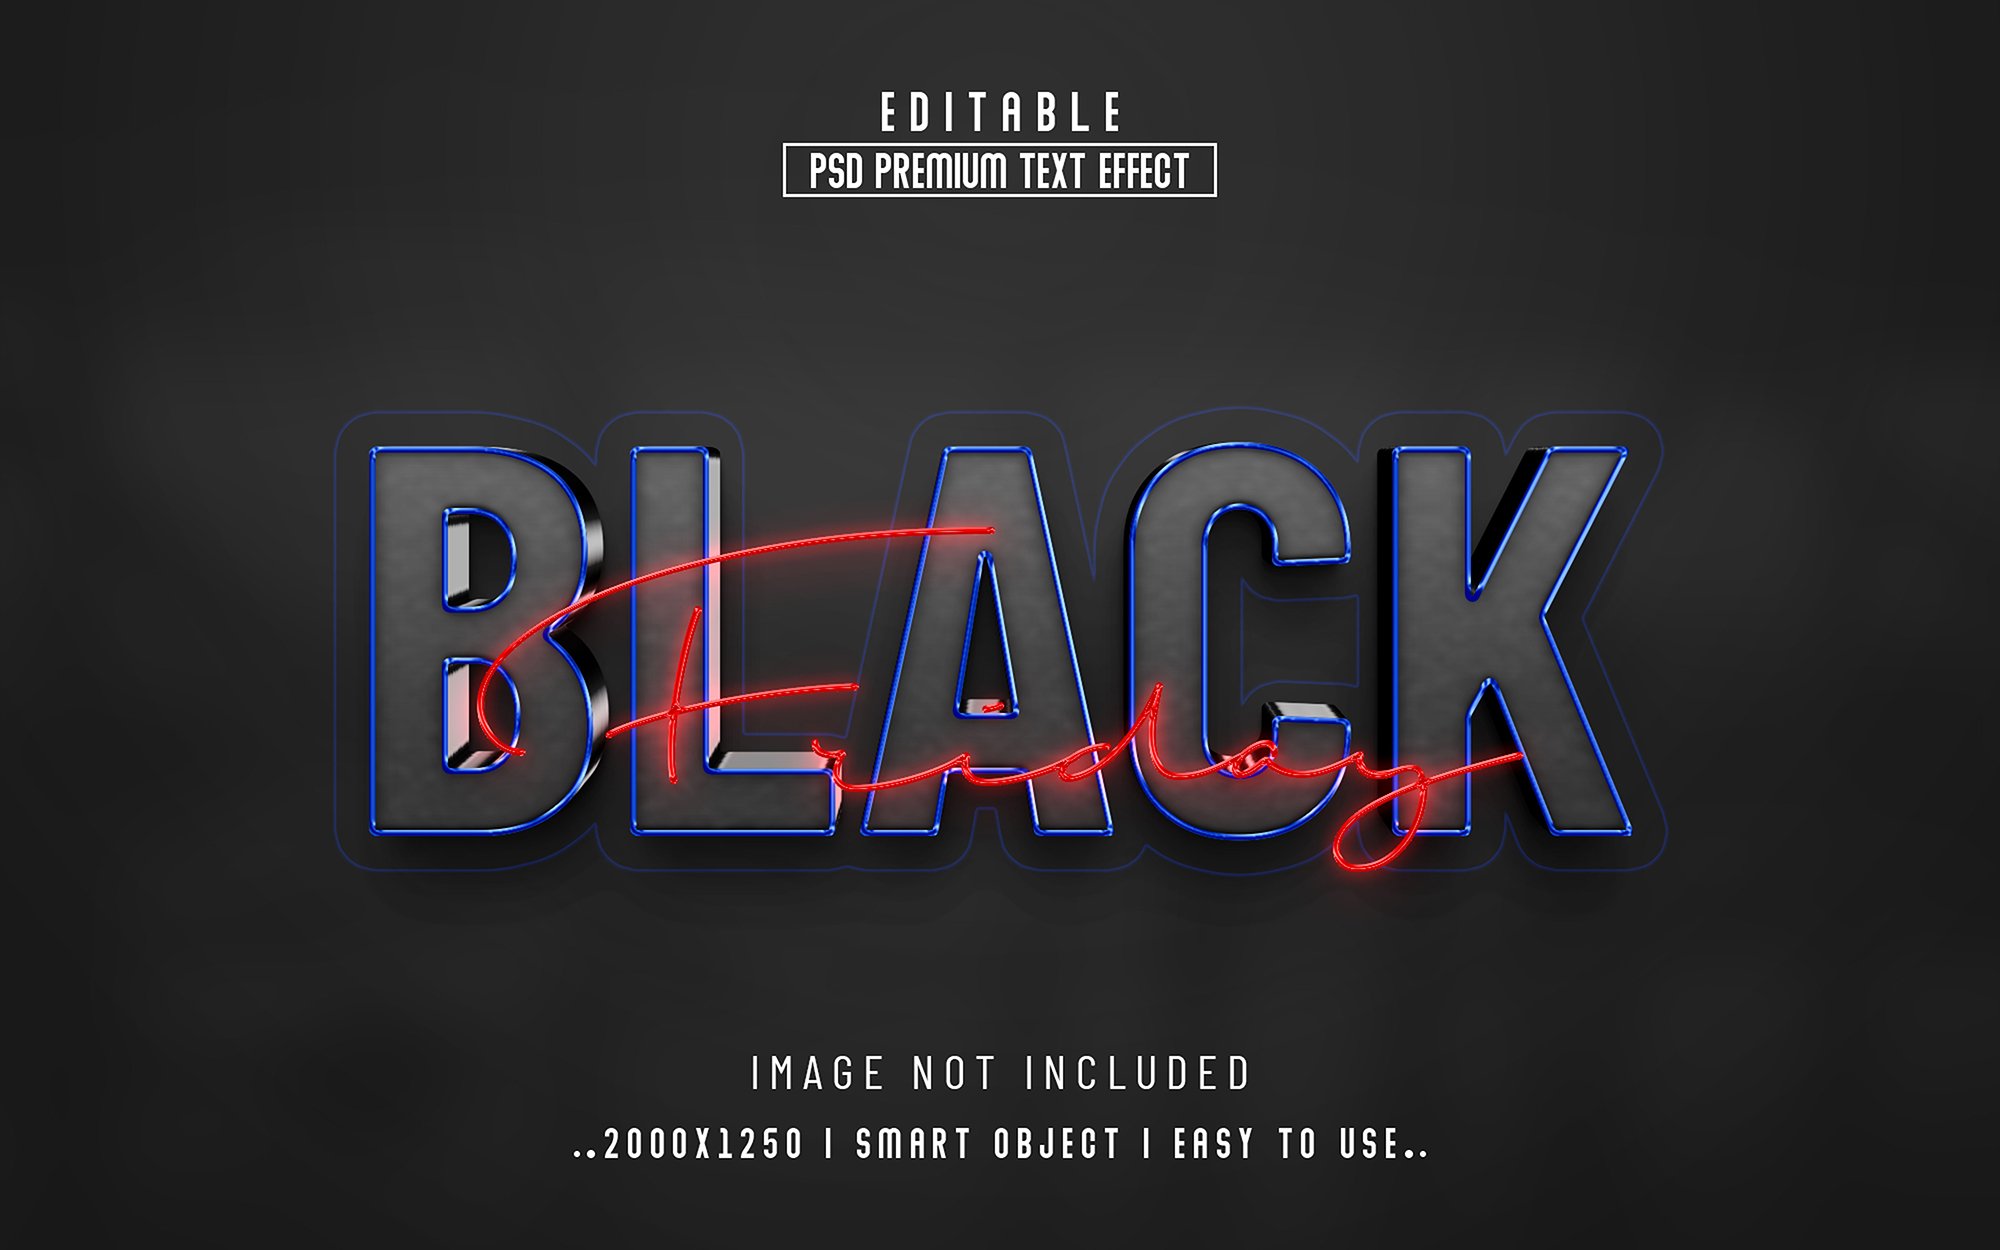 Black Friday 3D Editable Text stylecover image.